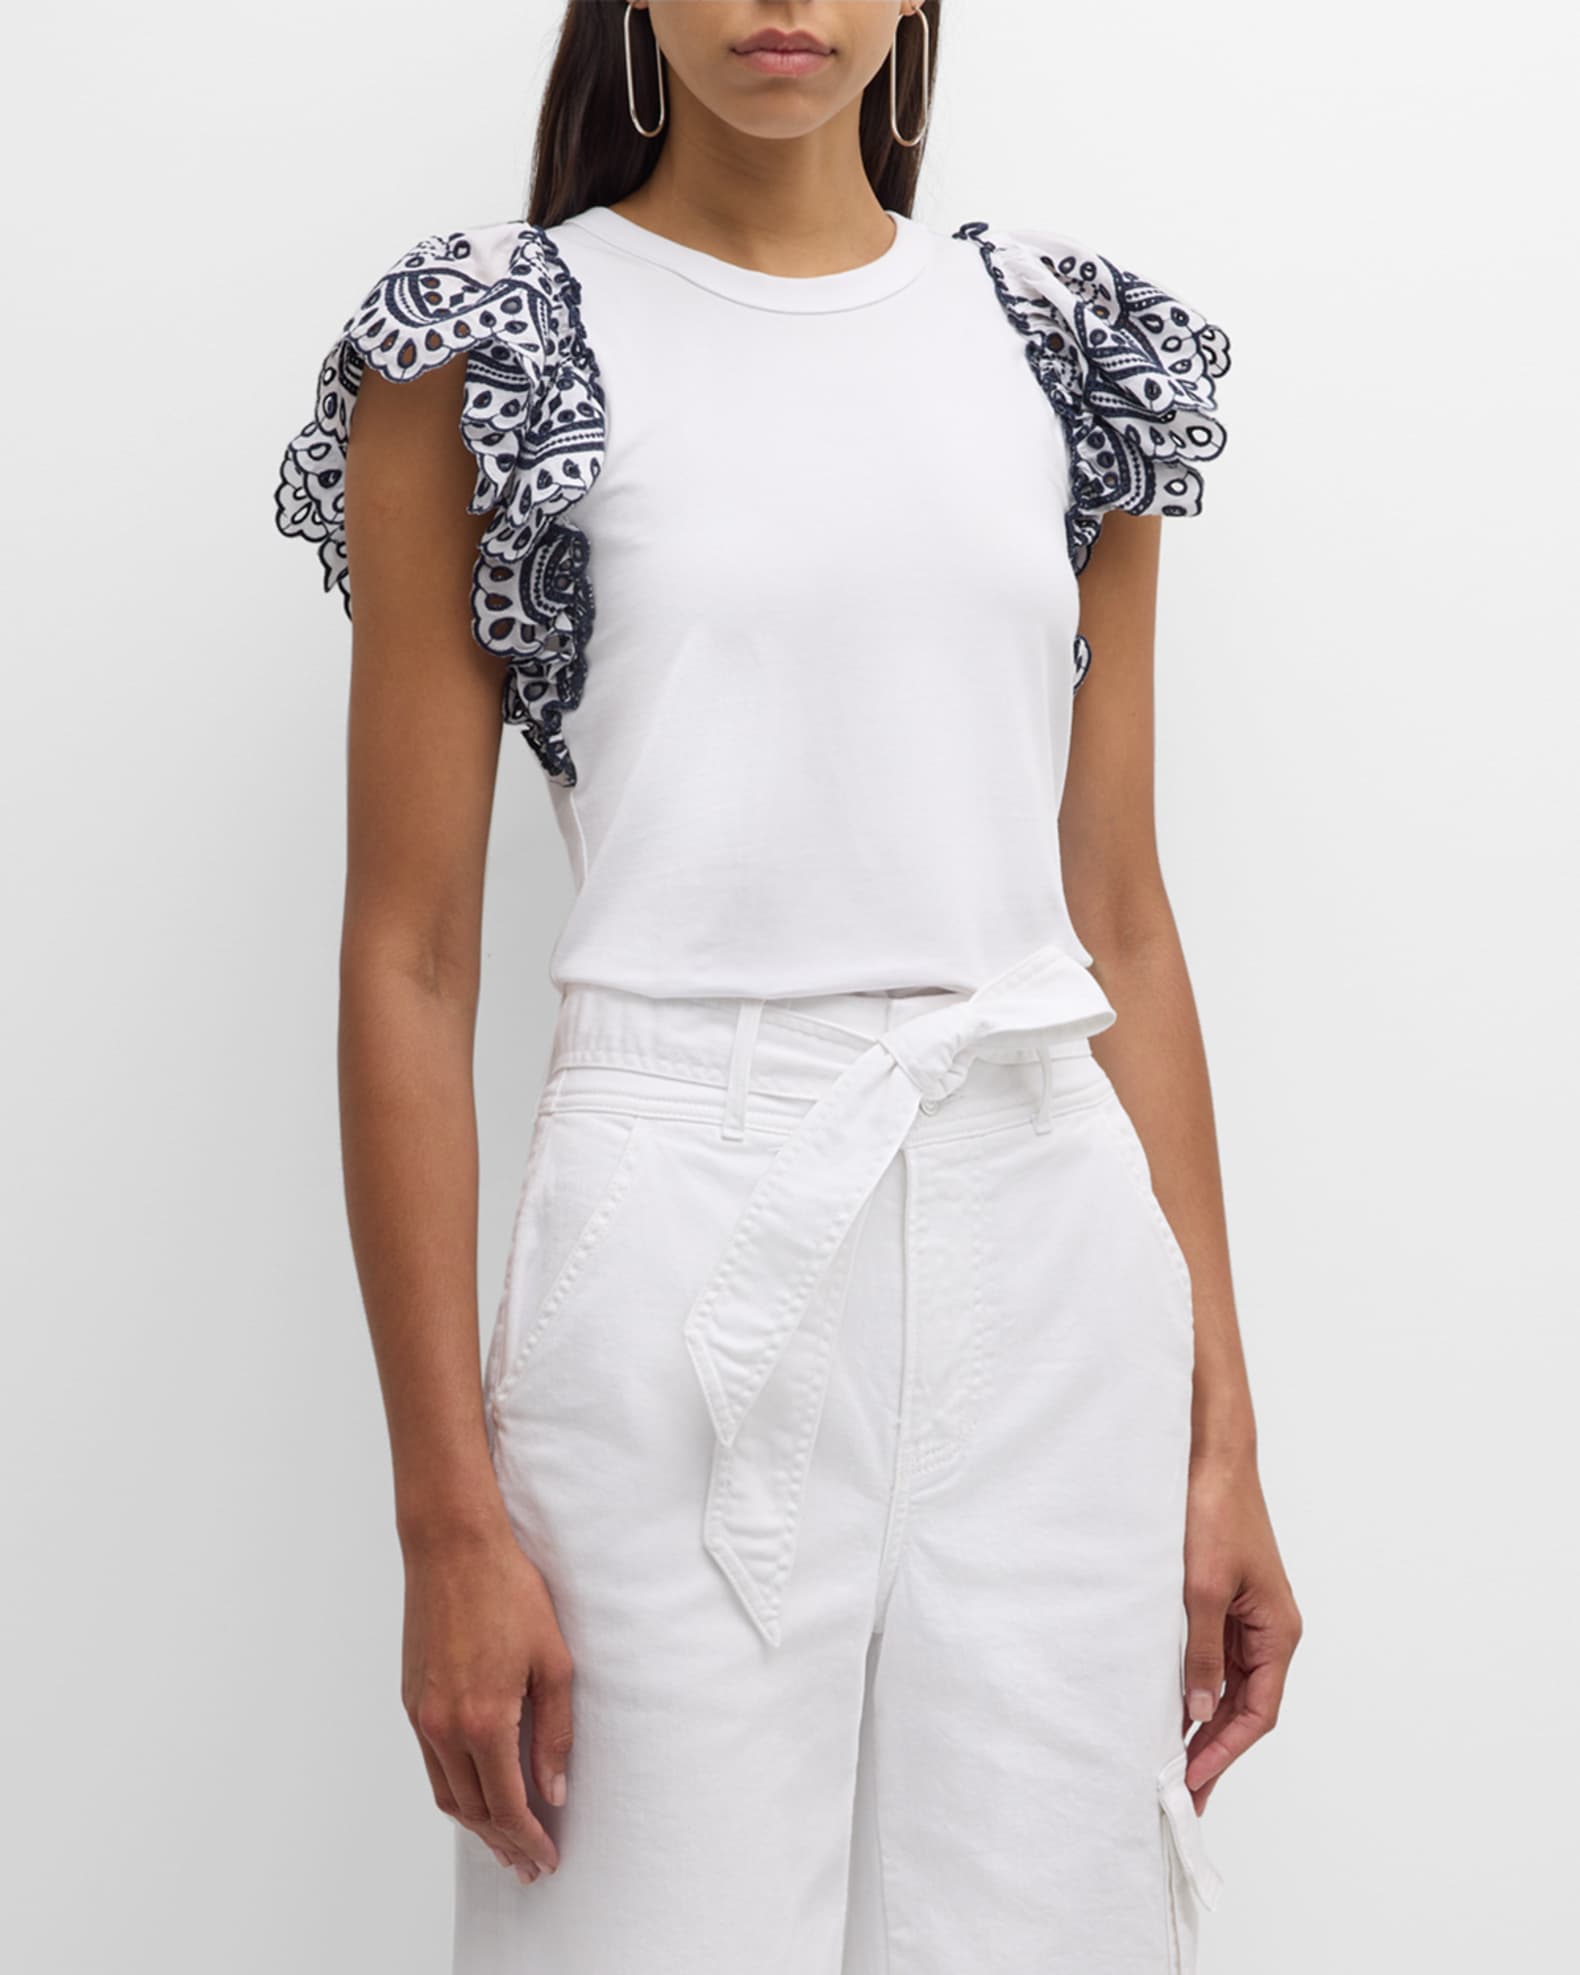 Chloé Kids contrast-stitching ruffle blouse - White